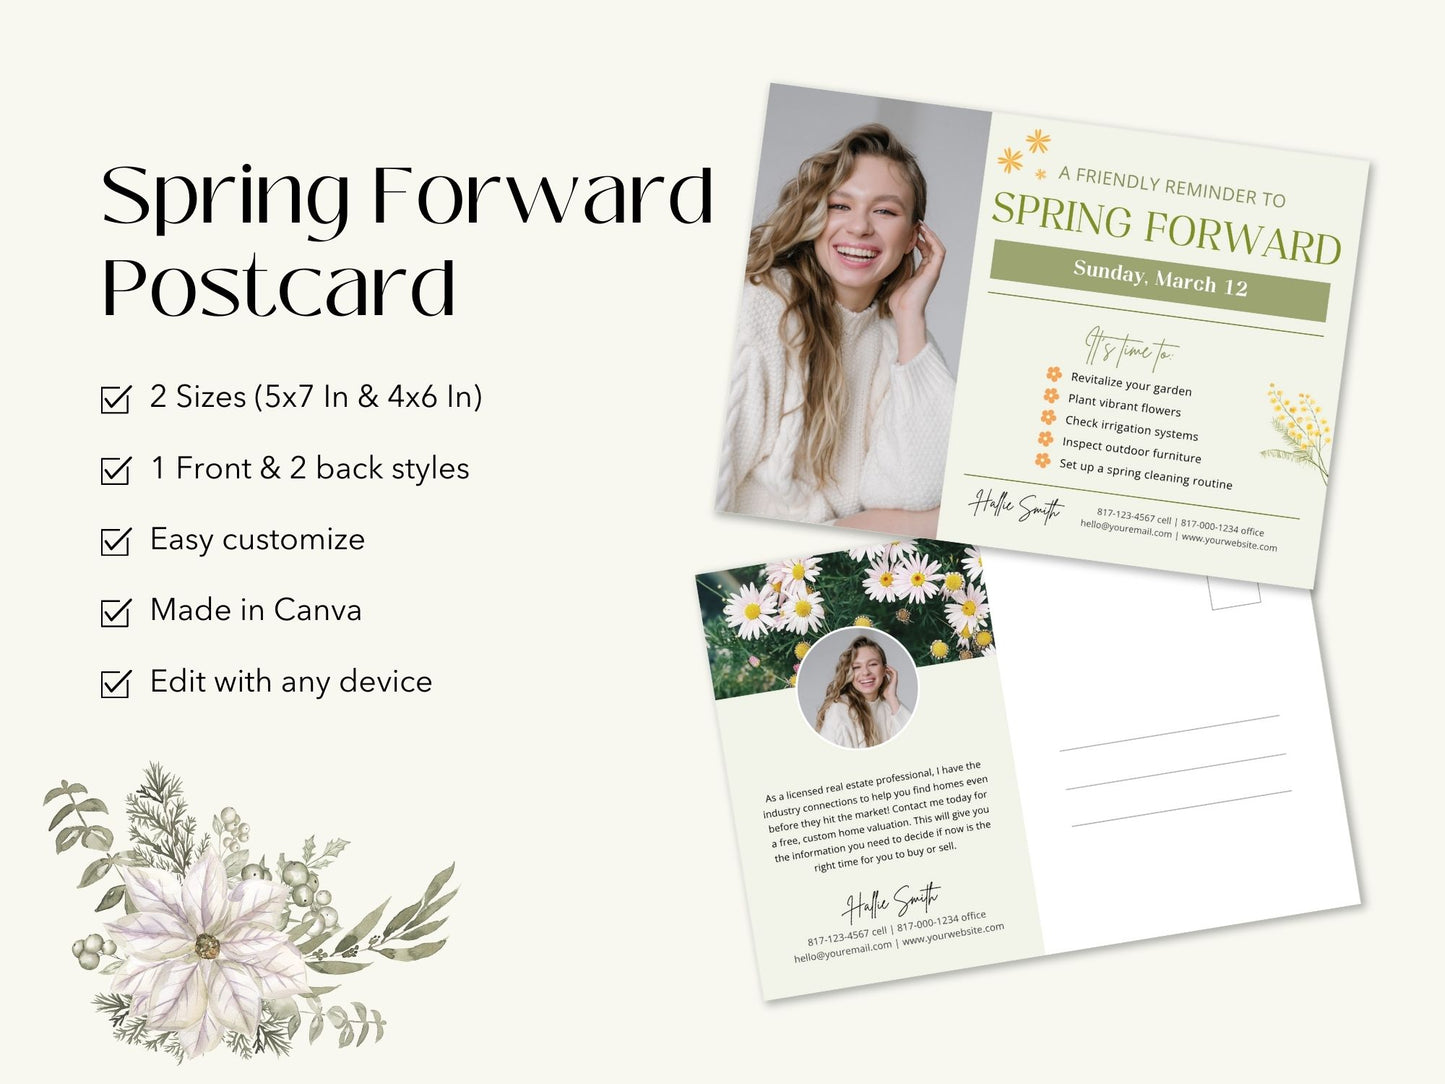 Spring Forward Reminder Postcard - Professionally designed real estate postcard for a timely reminder of daylight saving time.